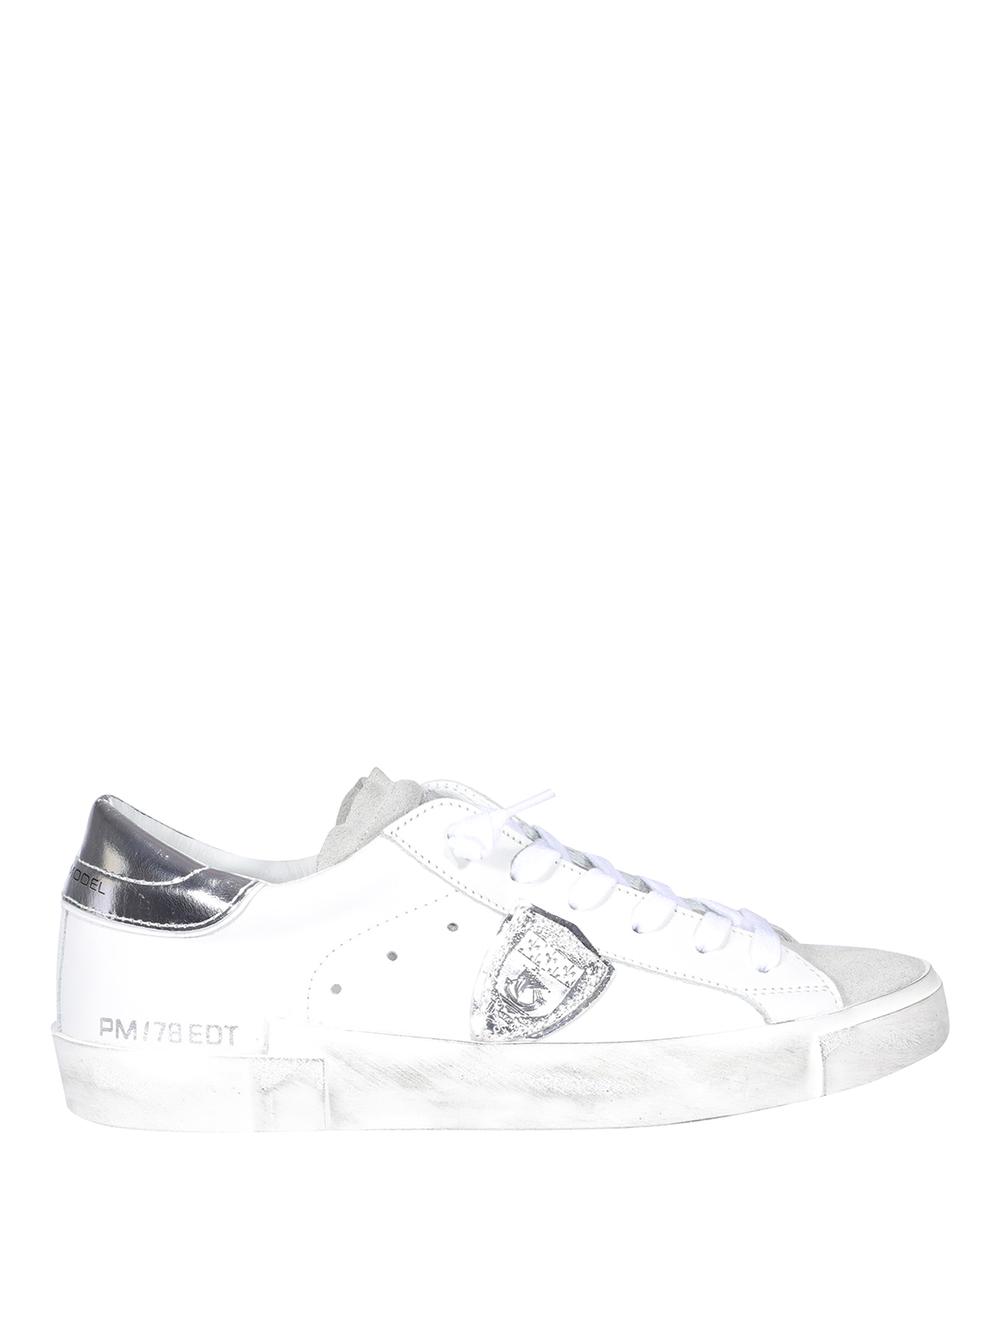 Philippe Model - Sneaker PARIS Pelle e Suede Bianco/Silver Donna - PRLD 1005